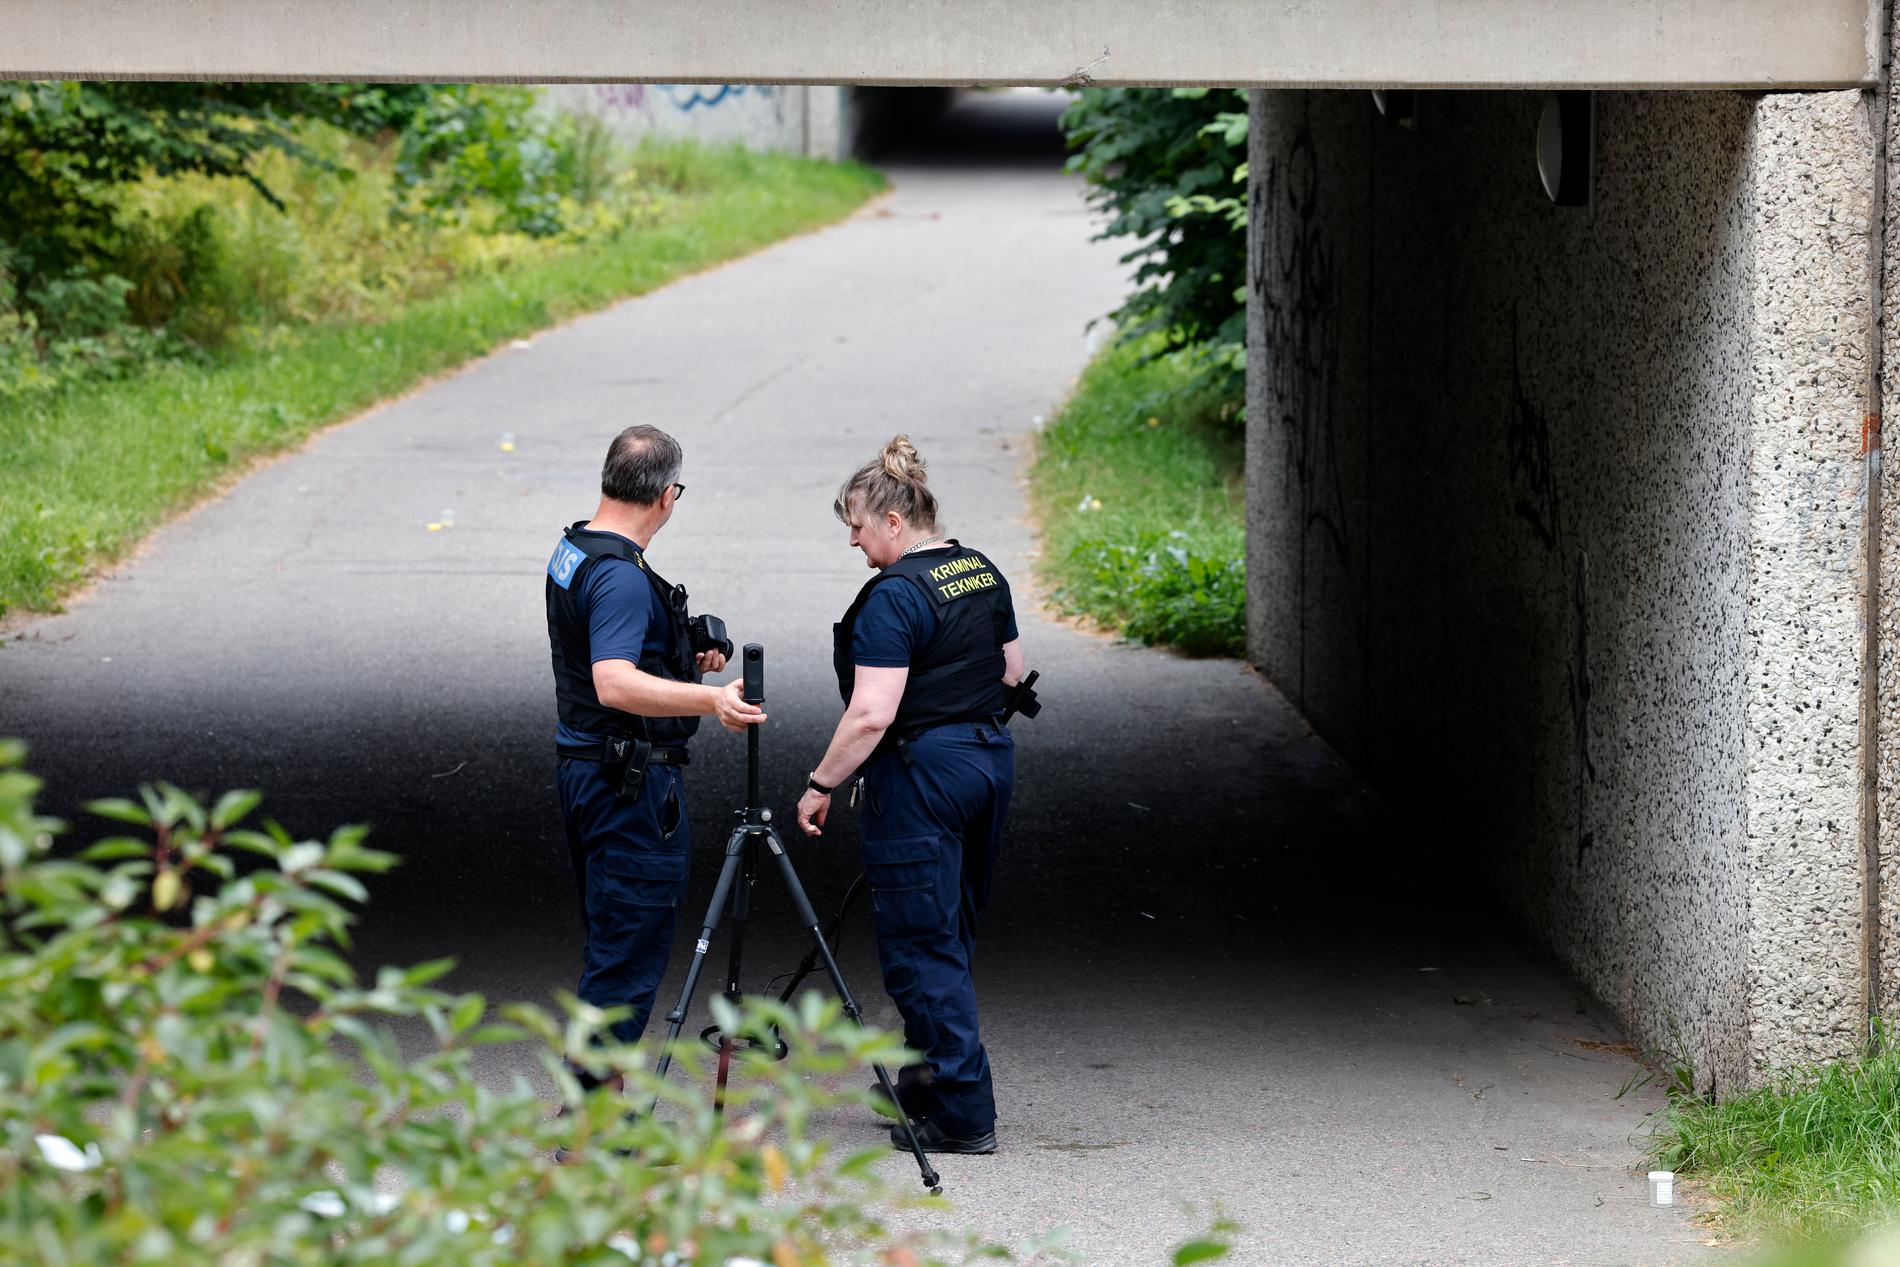 Polisens kriminaltekniker på plats efter skjutning i Gävle. 